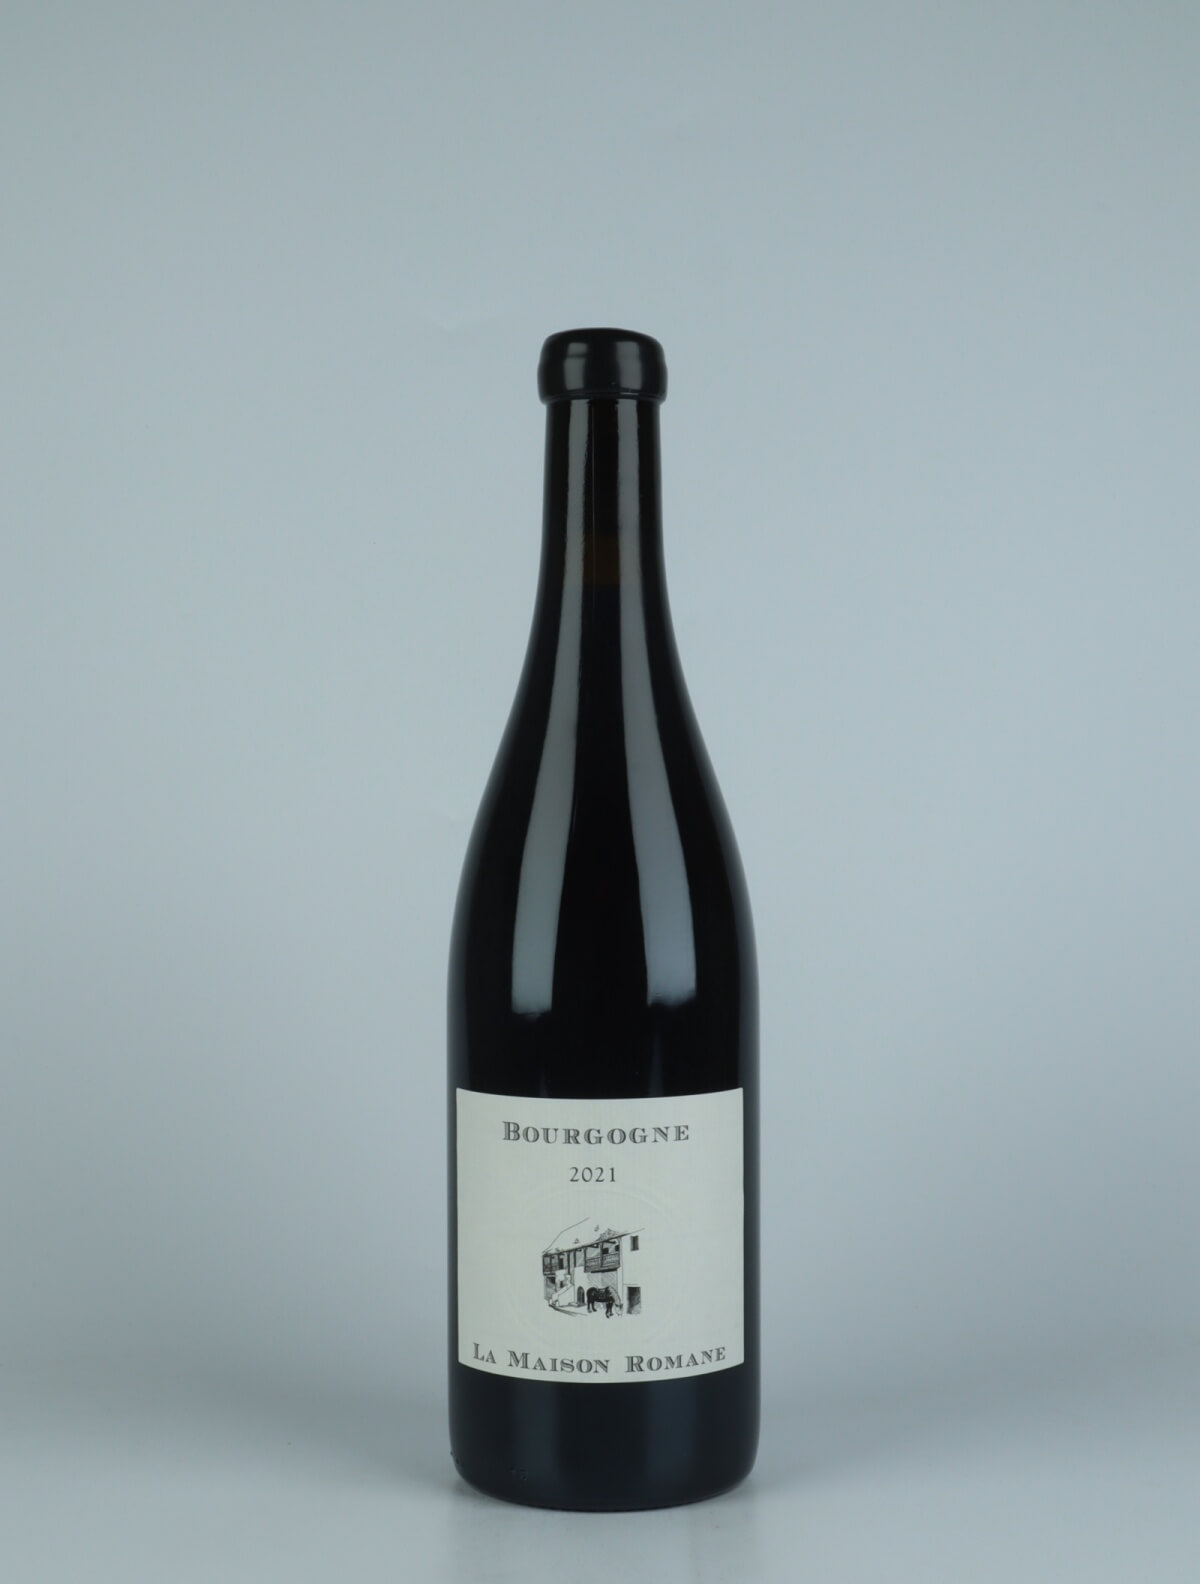 En flaske 2021 Bourgogne Rouge Rødvin fra La Maison Romane, Bourgogne i Frankrig